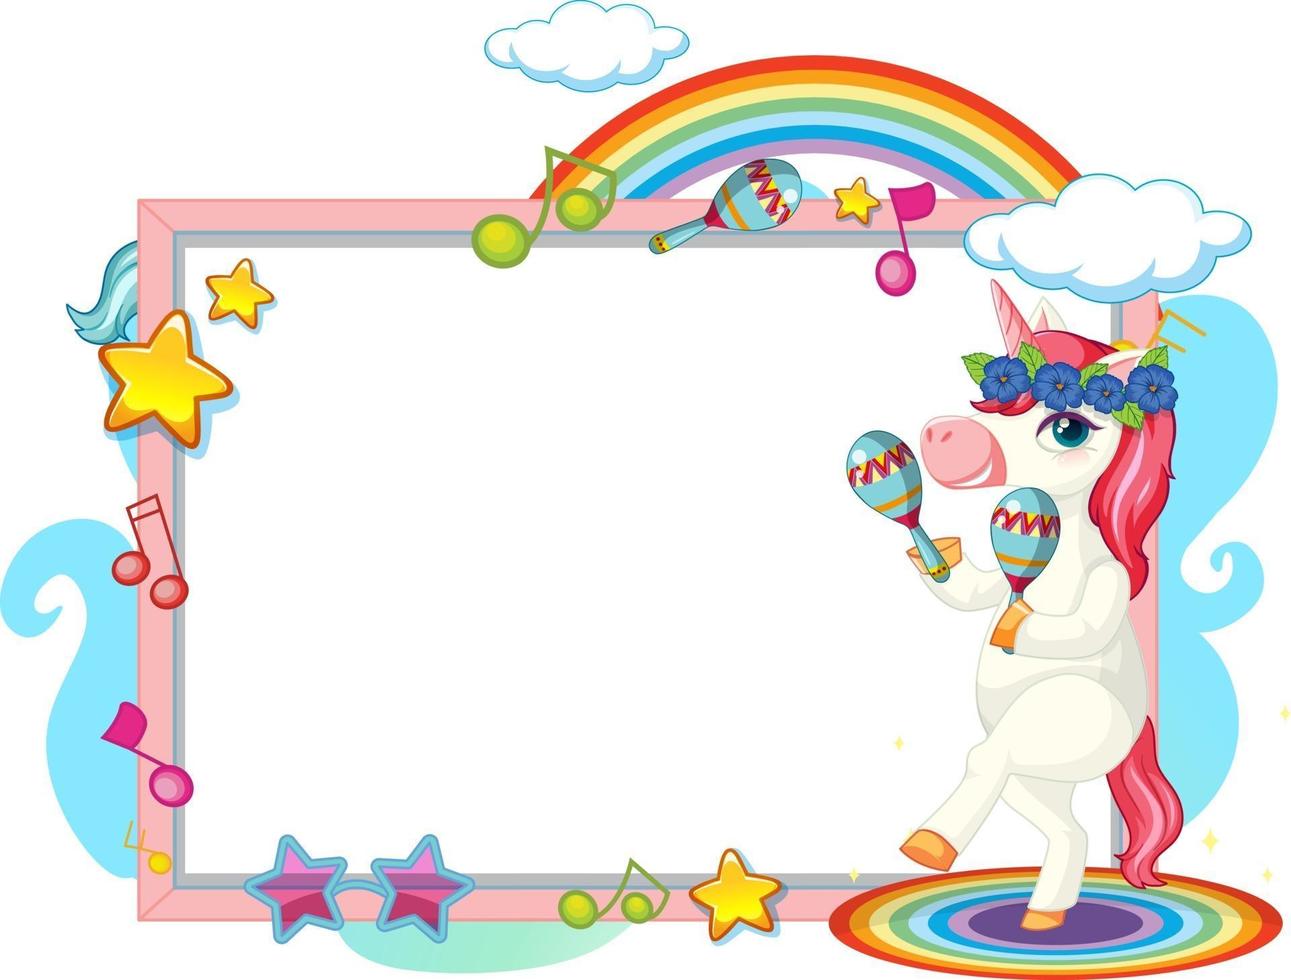 Cute unicorn cartoon character with blank banner vector